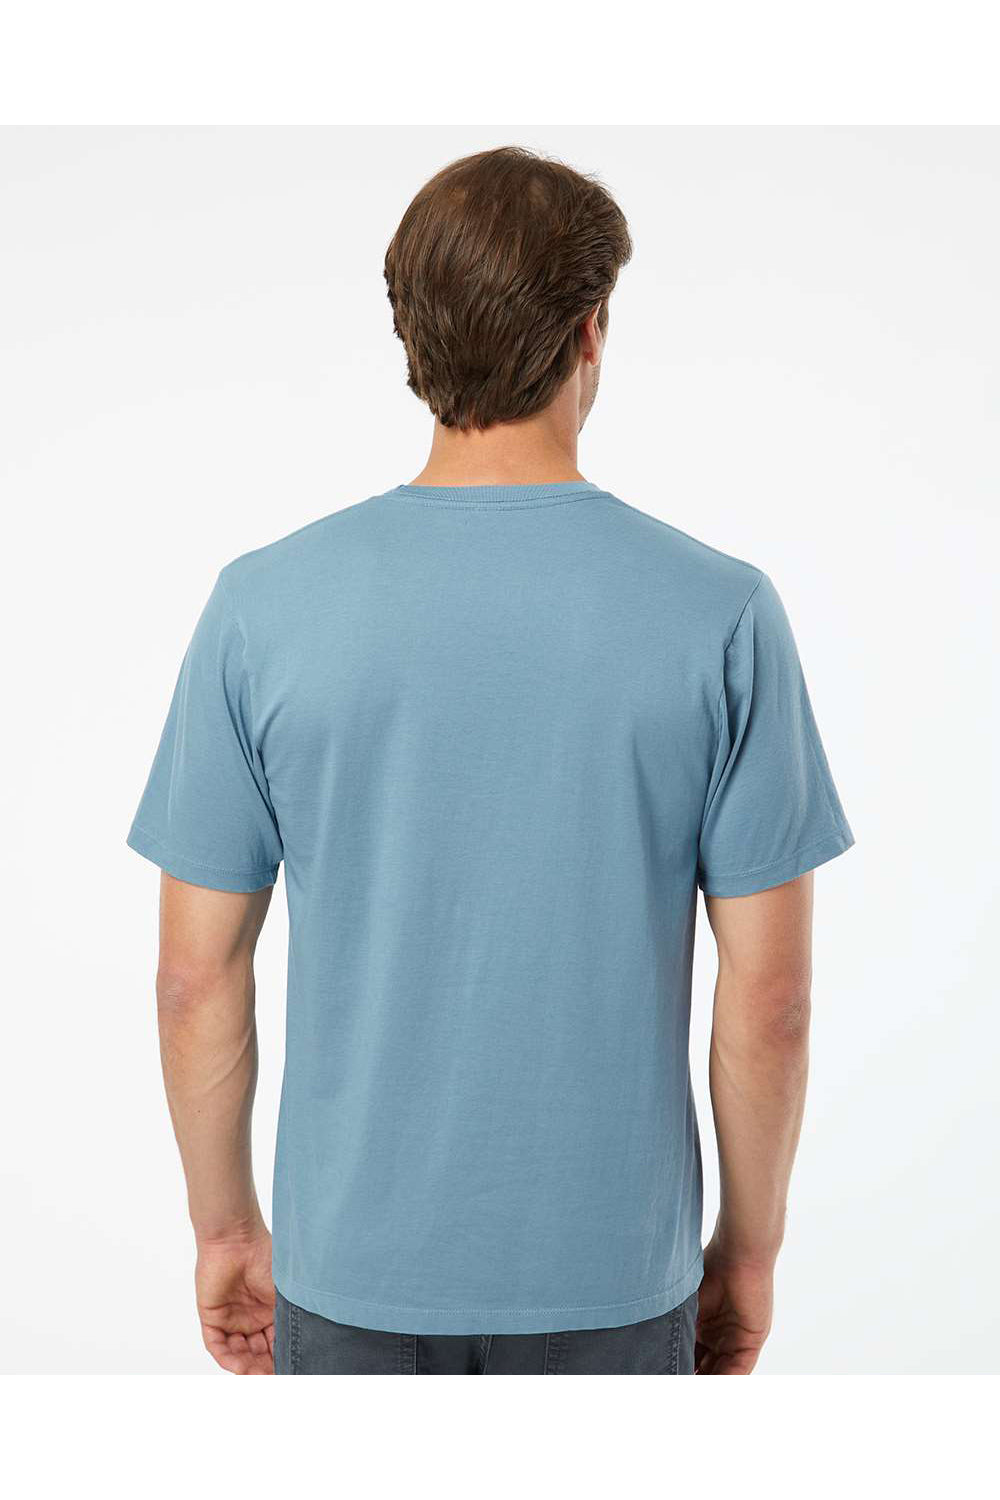 SoftShirts 400 Mens Organic Short Sleeve Crewneck T-Shirt Slate Blue Model Back